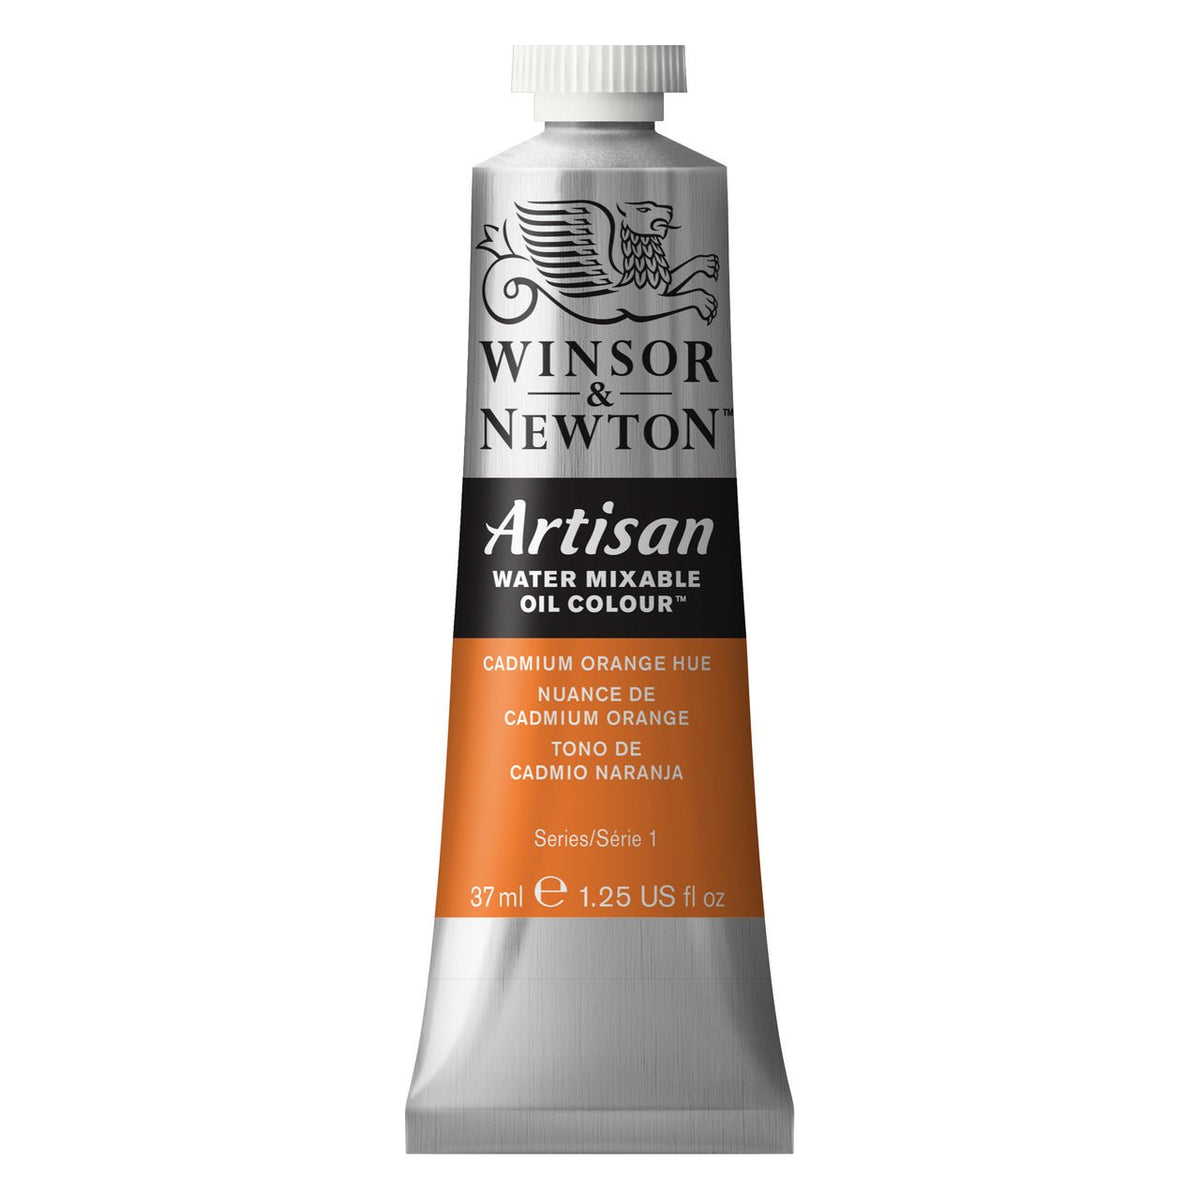 Winsor & Newton Artisan Water Mixable Oil 37ml - Cadmium Orange Hue - merriartist.com